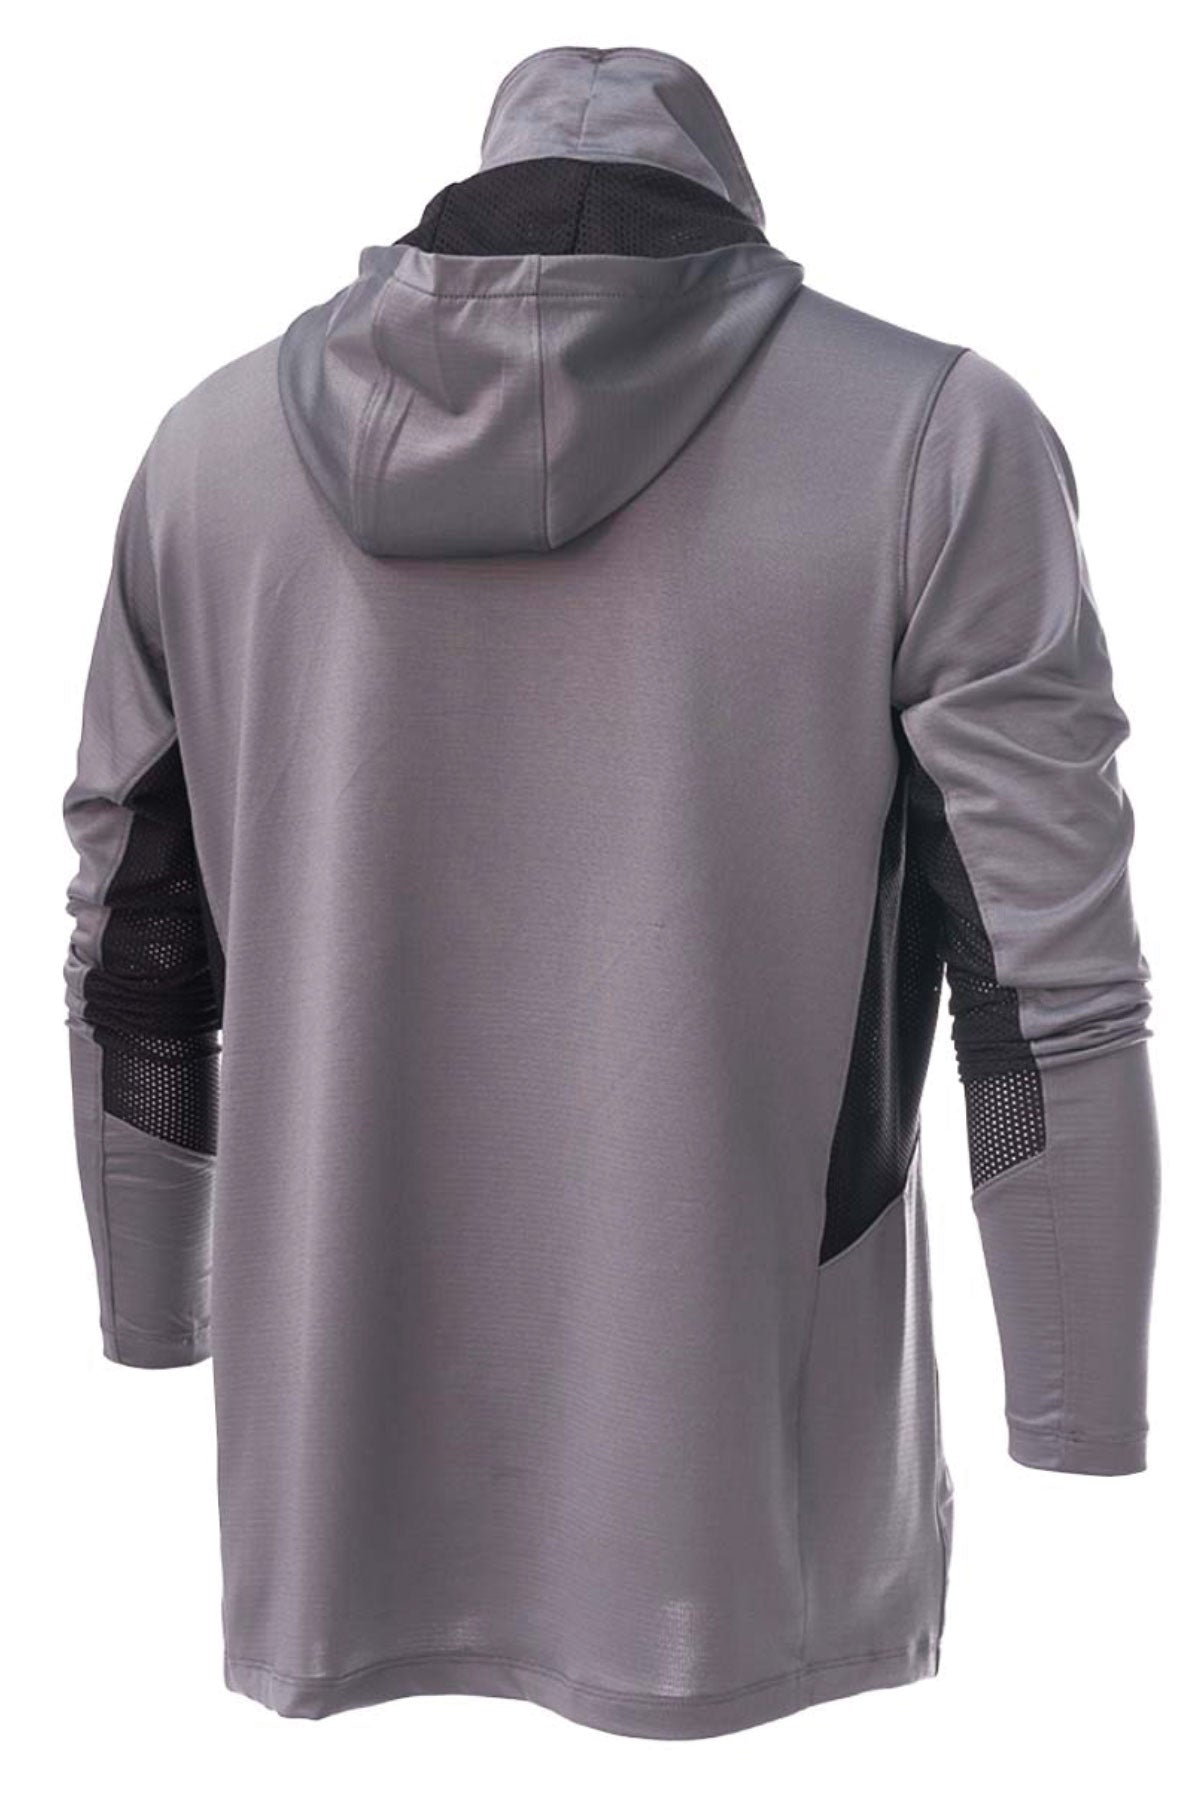 Argonaut Hooded Fishing Shirt -Grey - Stafu Pro Series